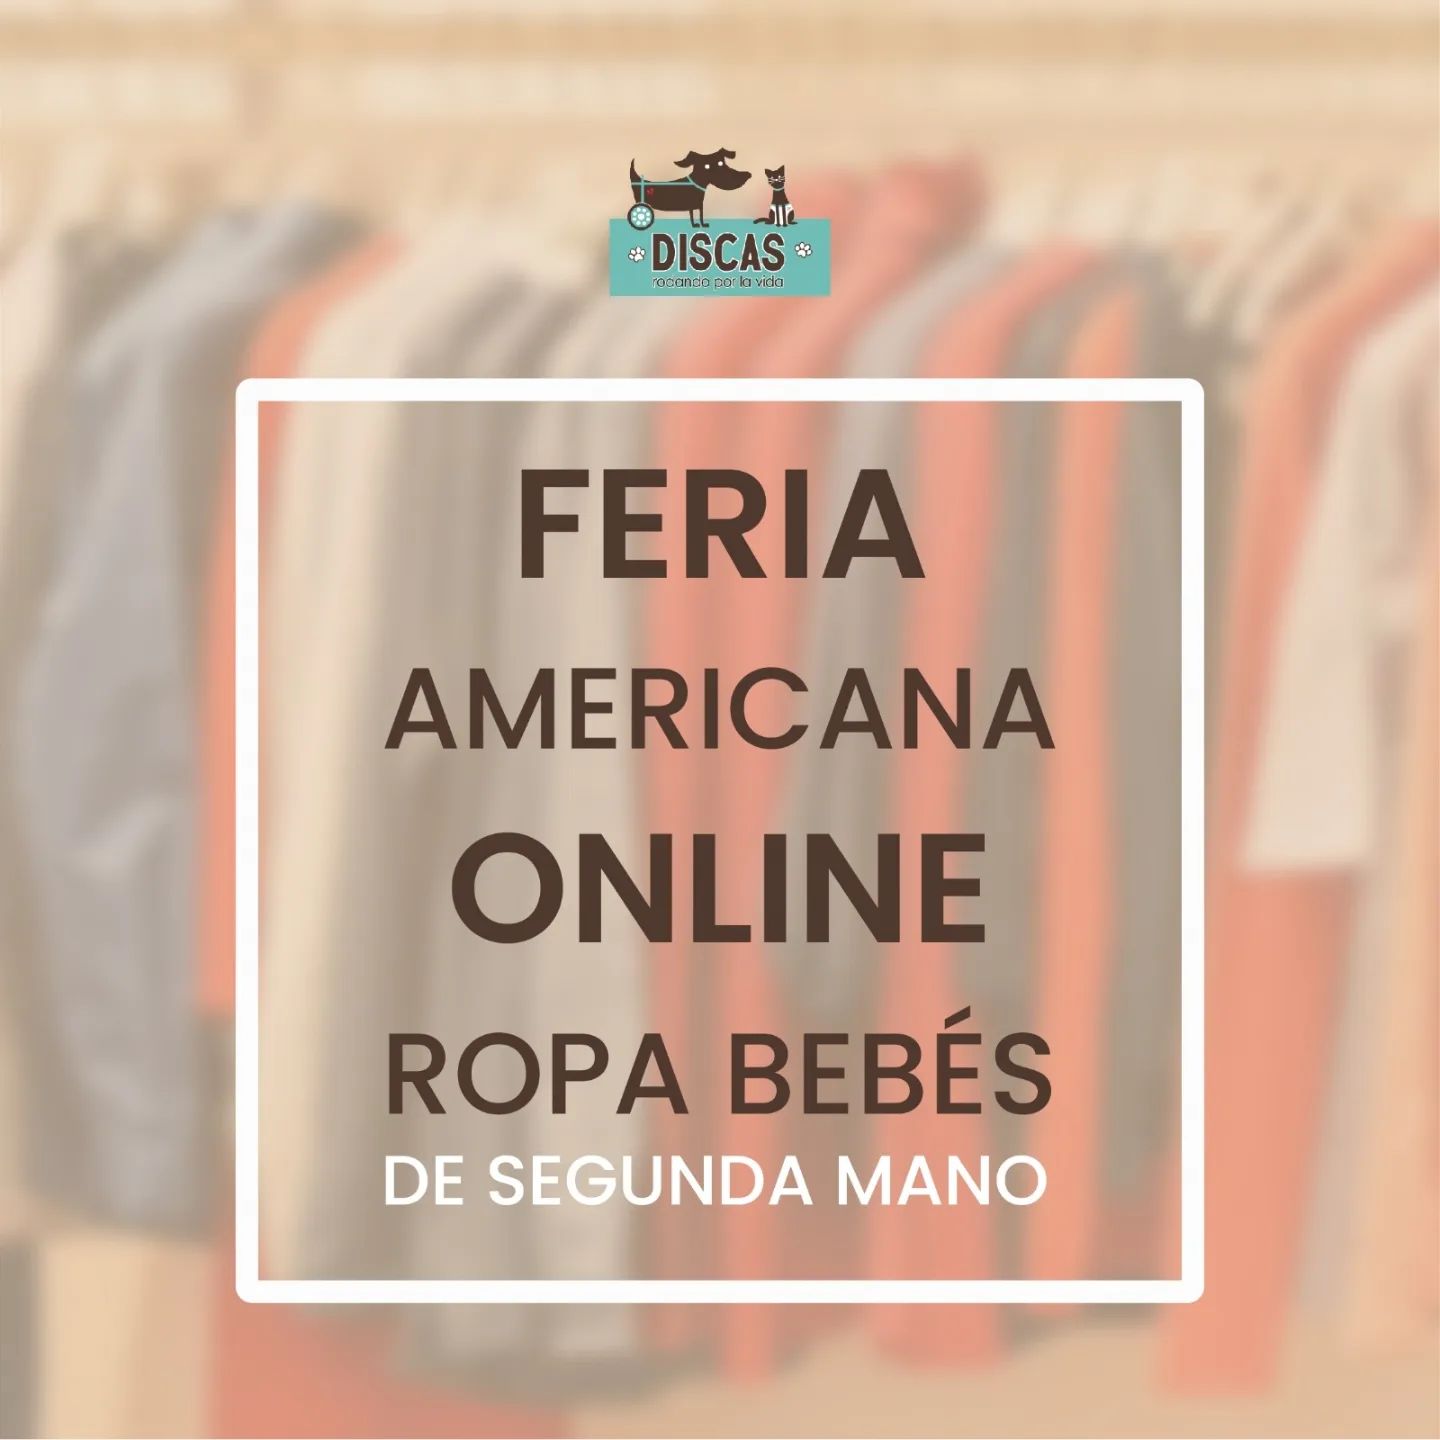 Feria americana online